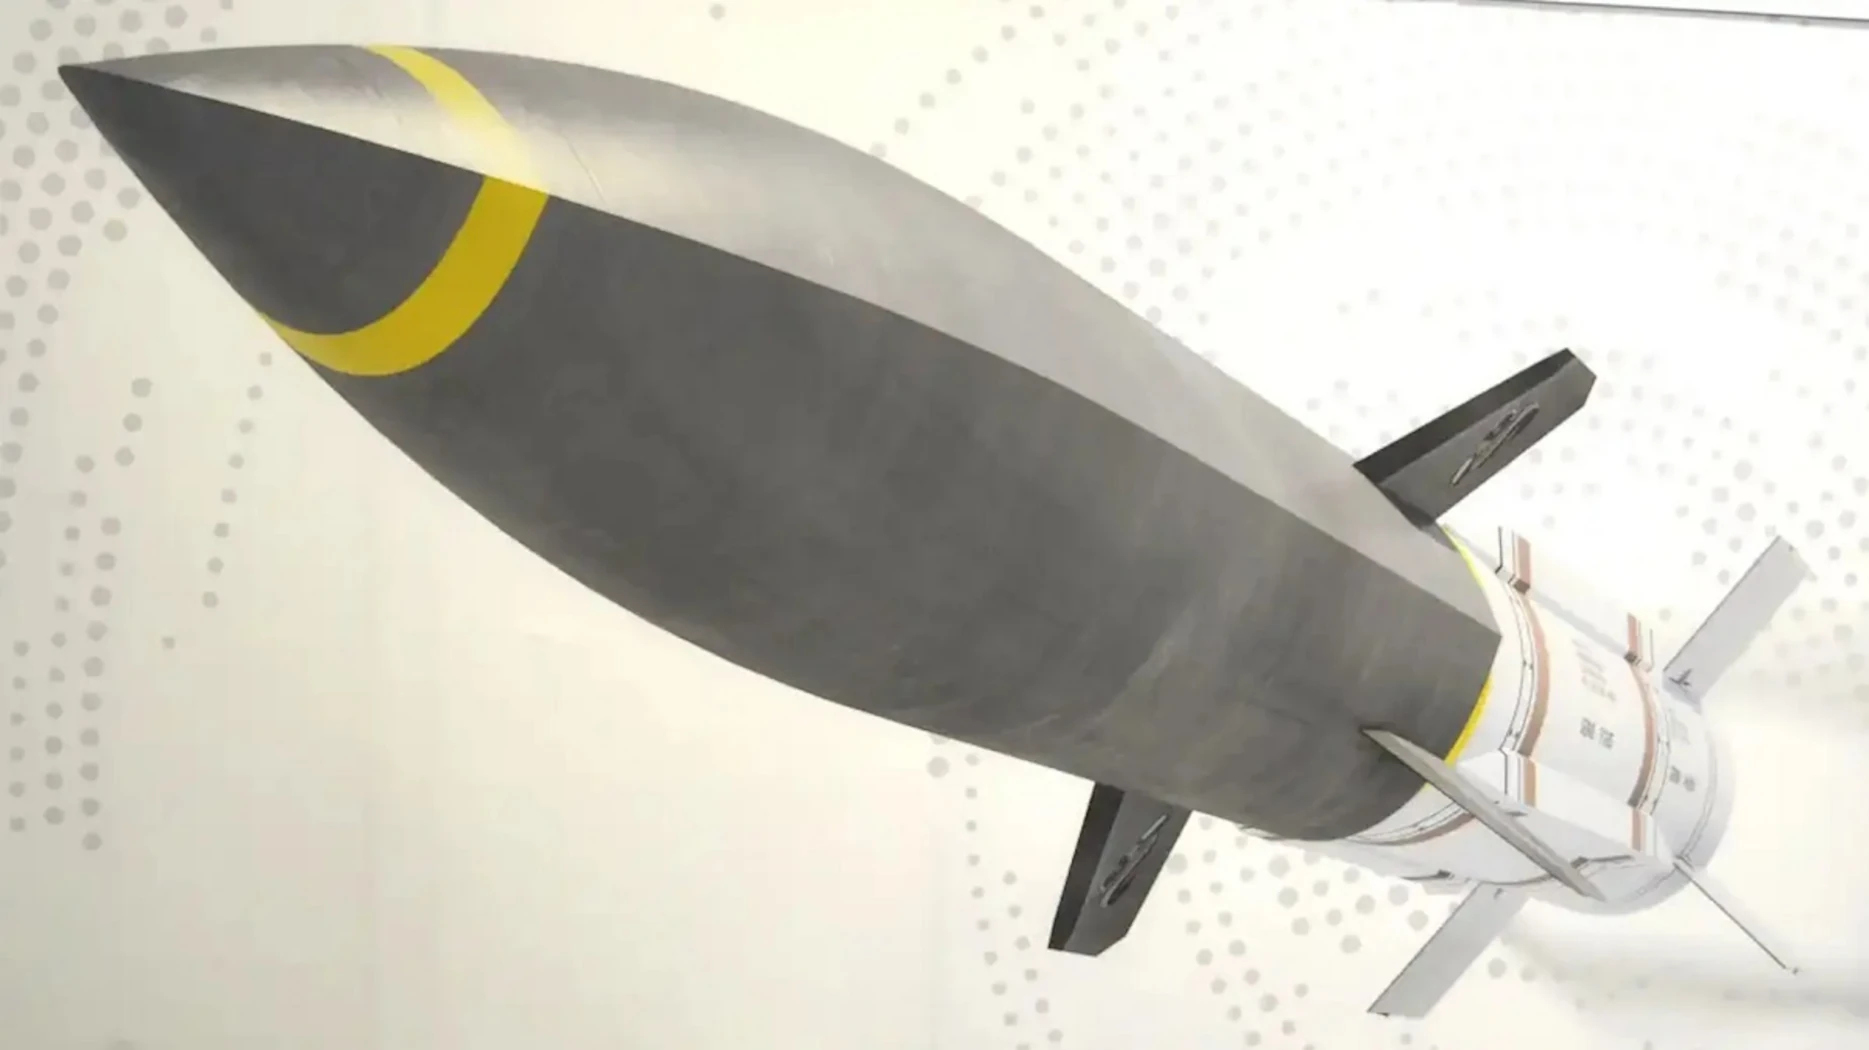 Lockheed Martin HAWC hypersonic missile